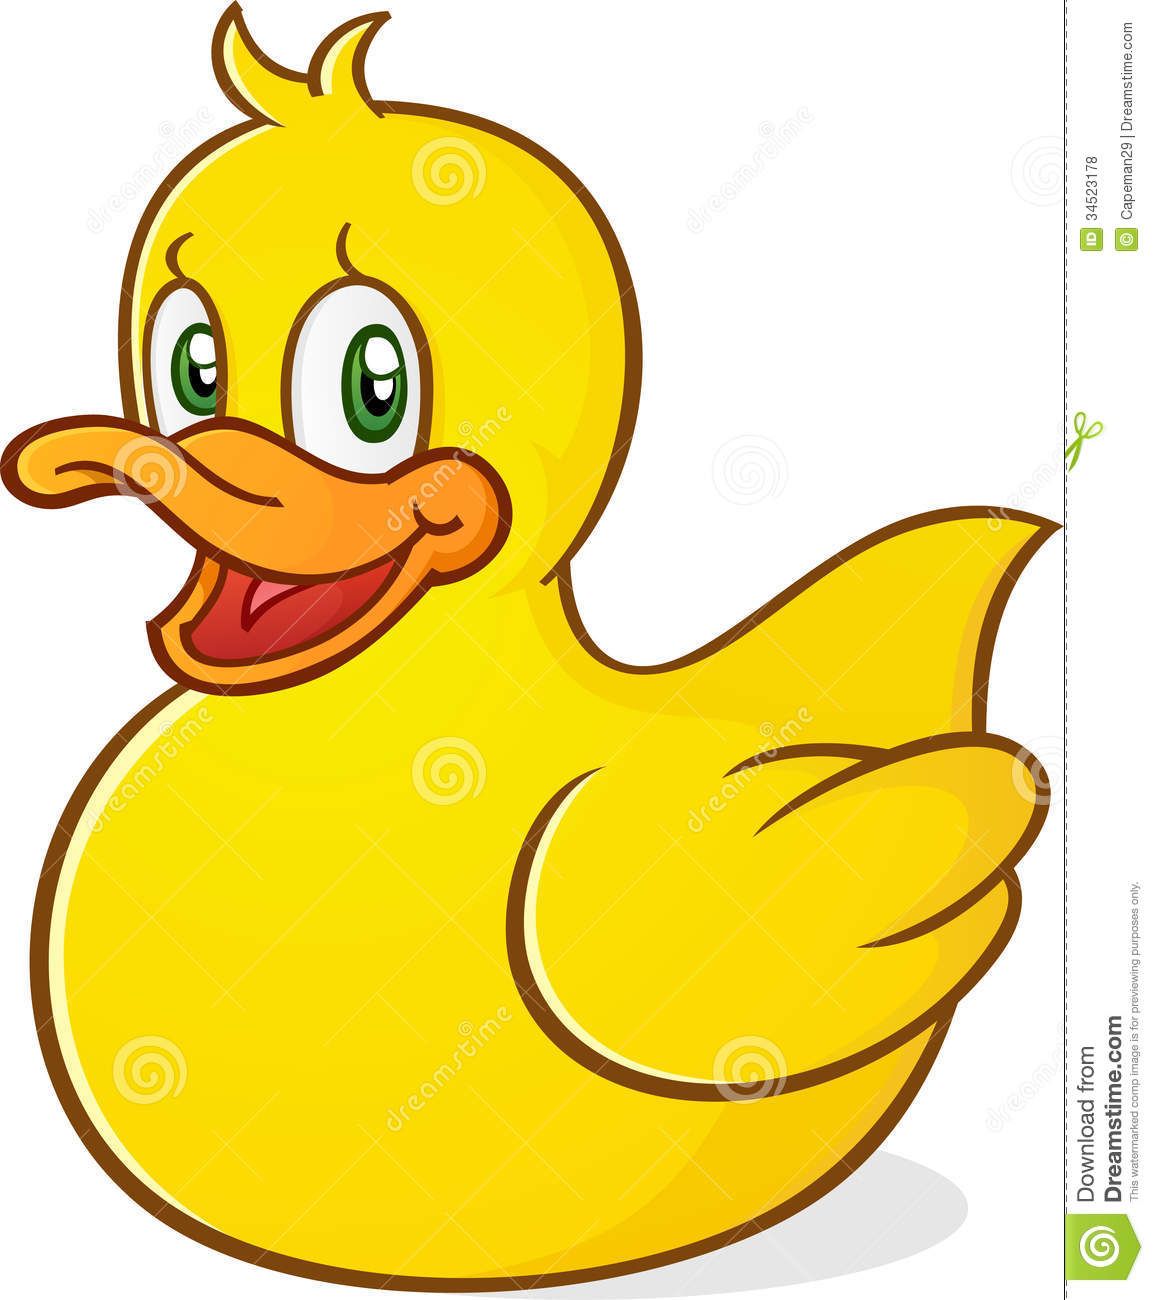 Cute Cartoon rubber duck